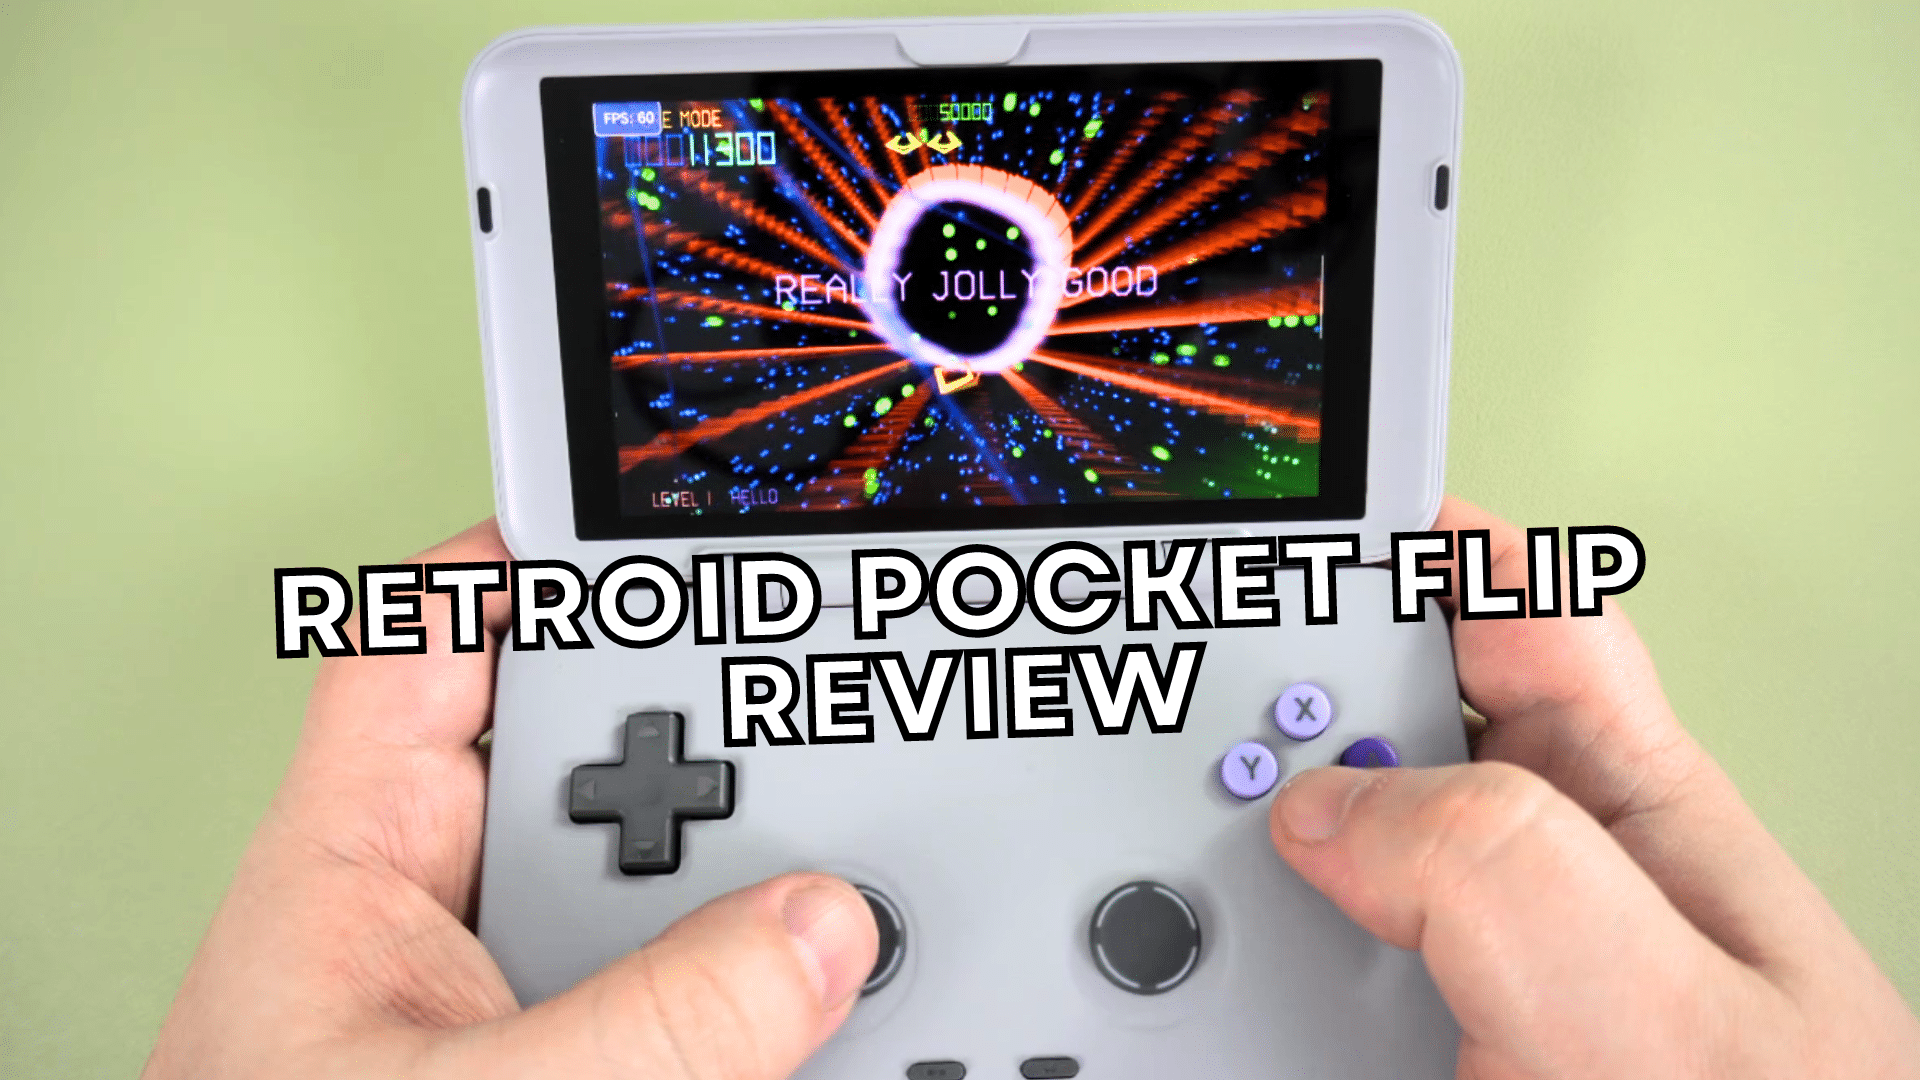 Buy Retroid Pocket 2S Retro Game Handheld Console, Android Retro